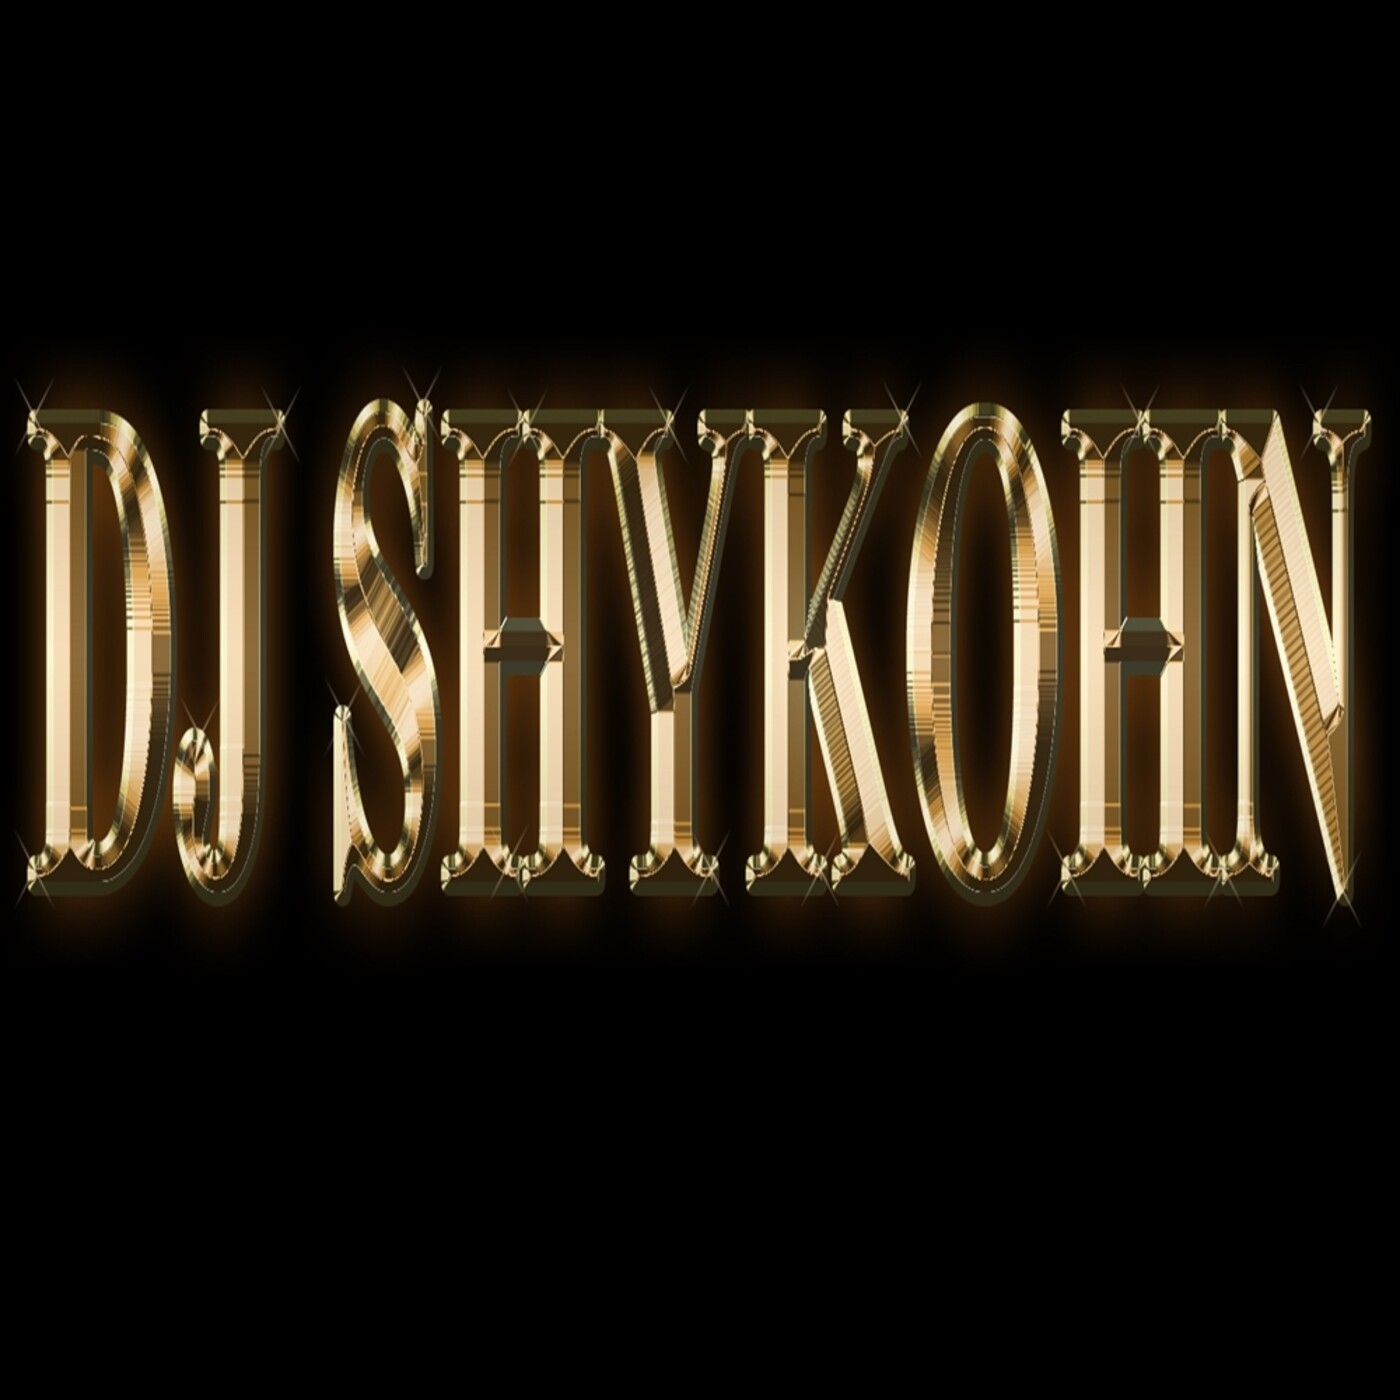 Remix reggaeton nuevo 3 - dj shykohn